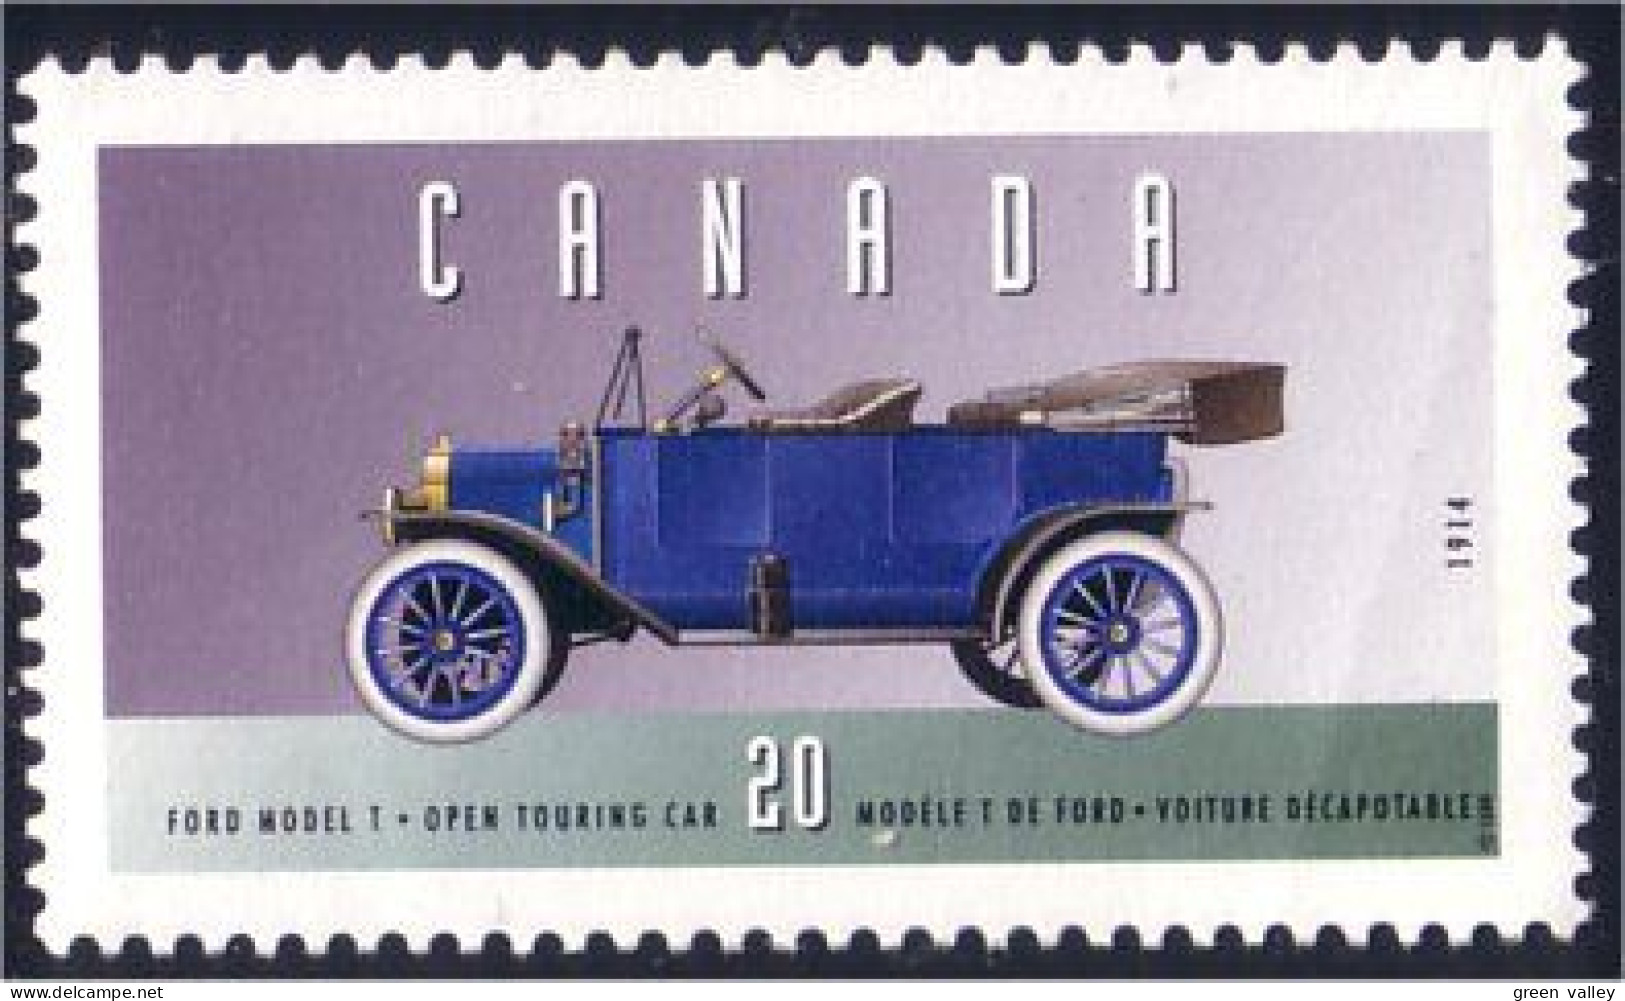 Canada Automobile Ford Model T Car MNH ** Neuf SC (C16-05oa) - Nuevos